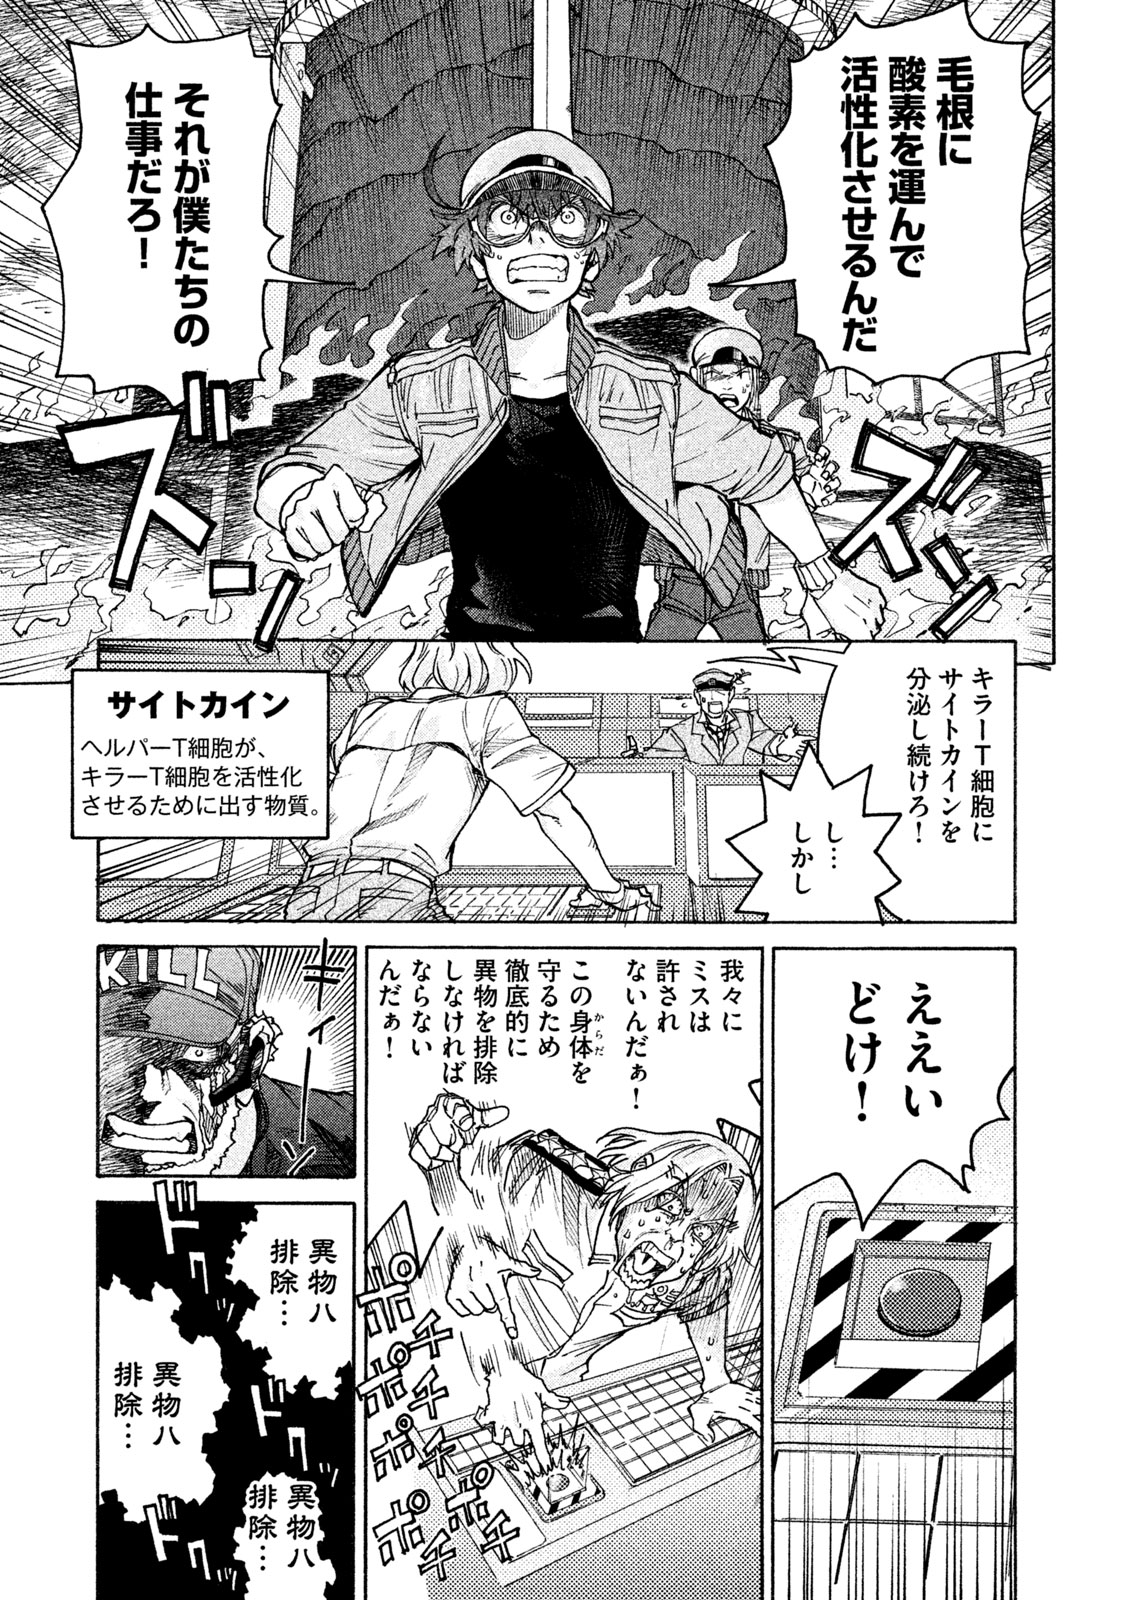 Hataraku Saibou BLACK - Chapter 5 - Page 17